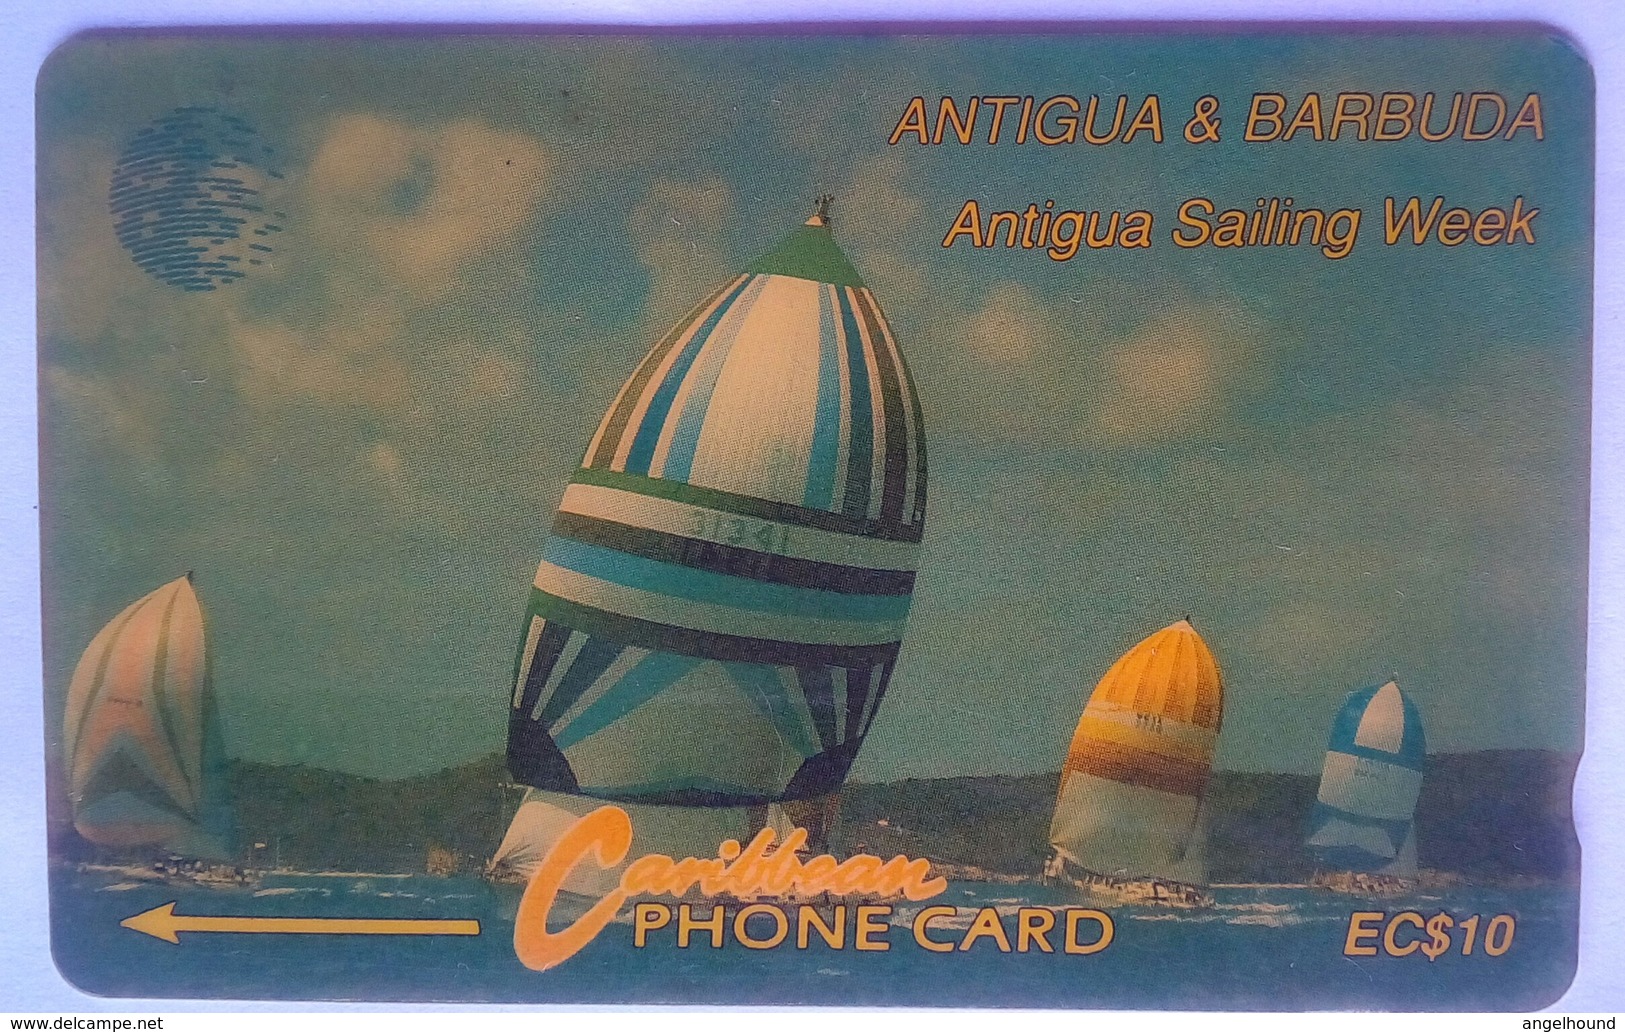 11CATA Sailing Week EC$10 - Antigua And Barbuda